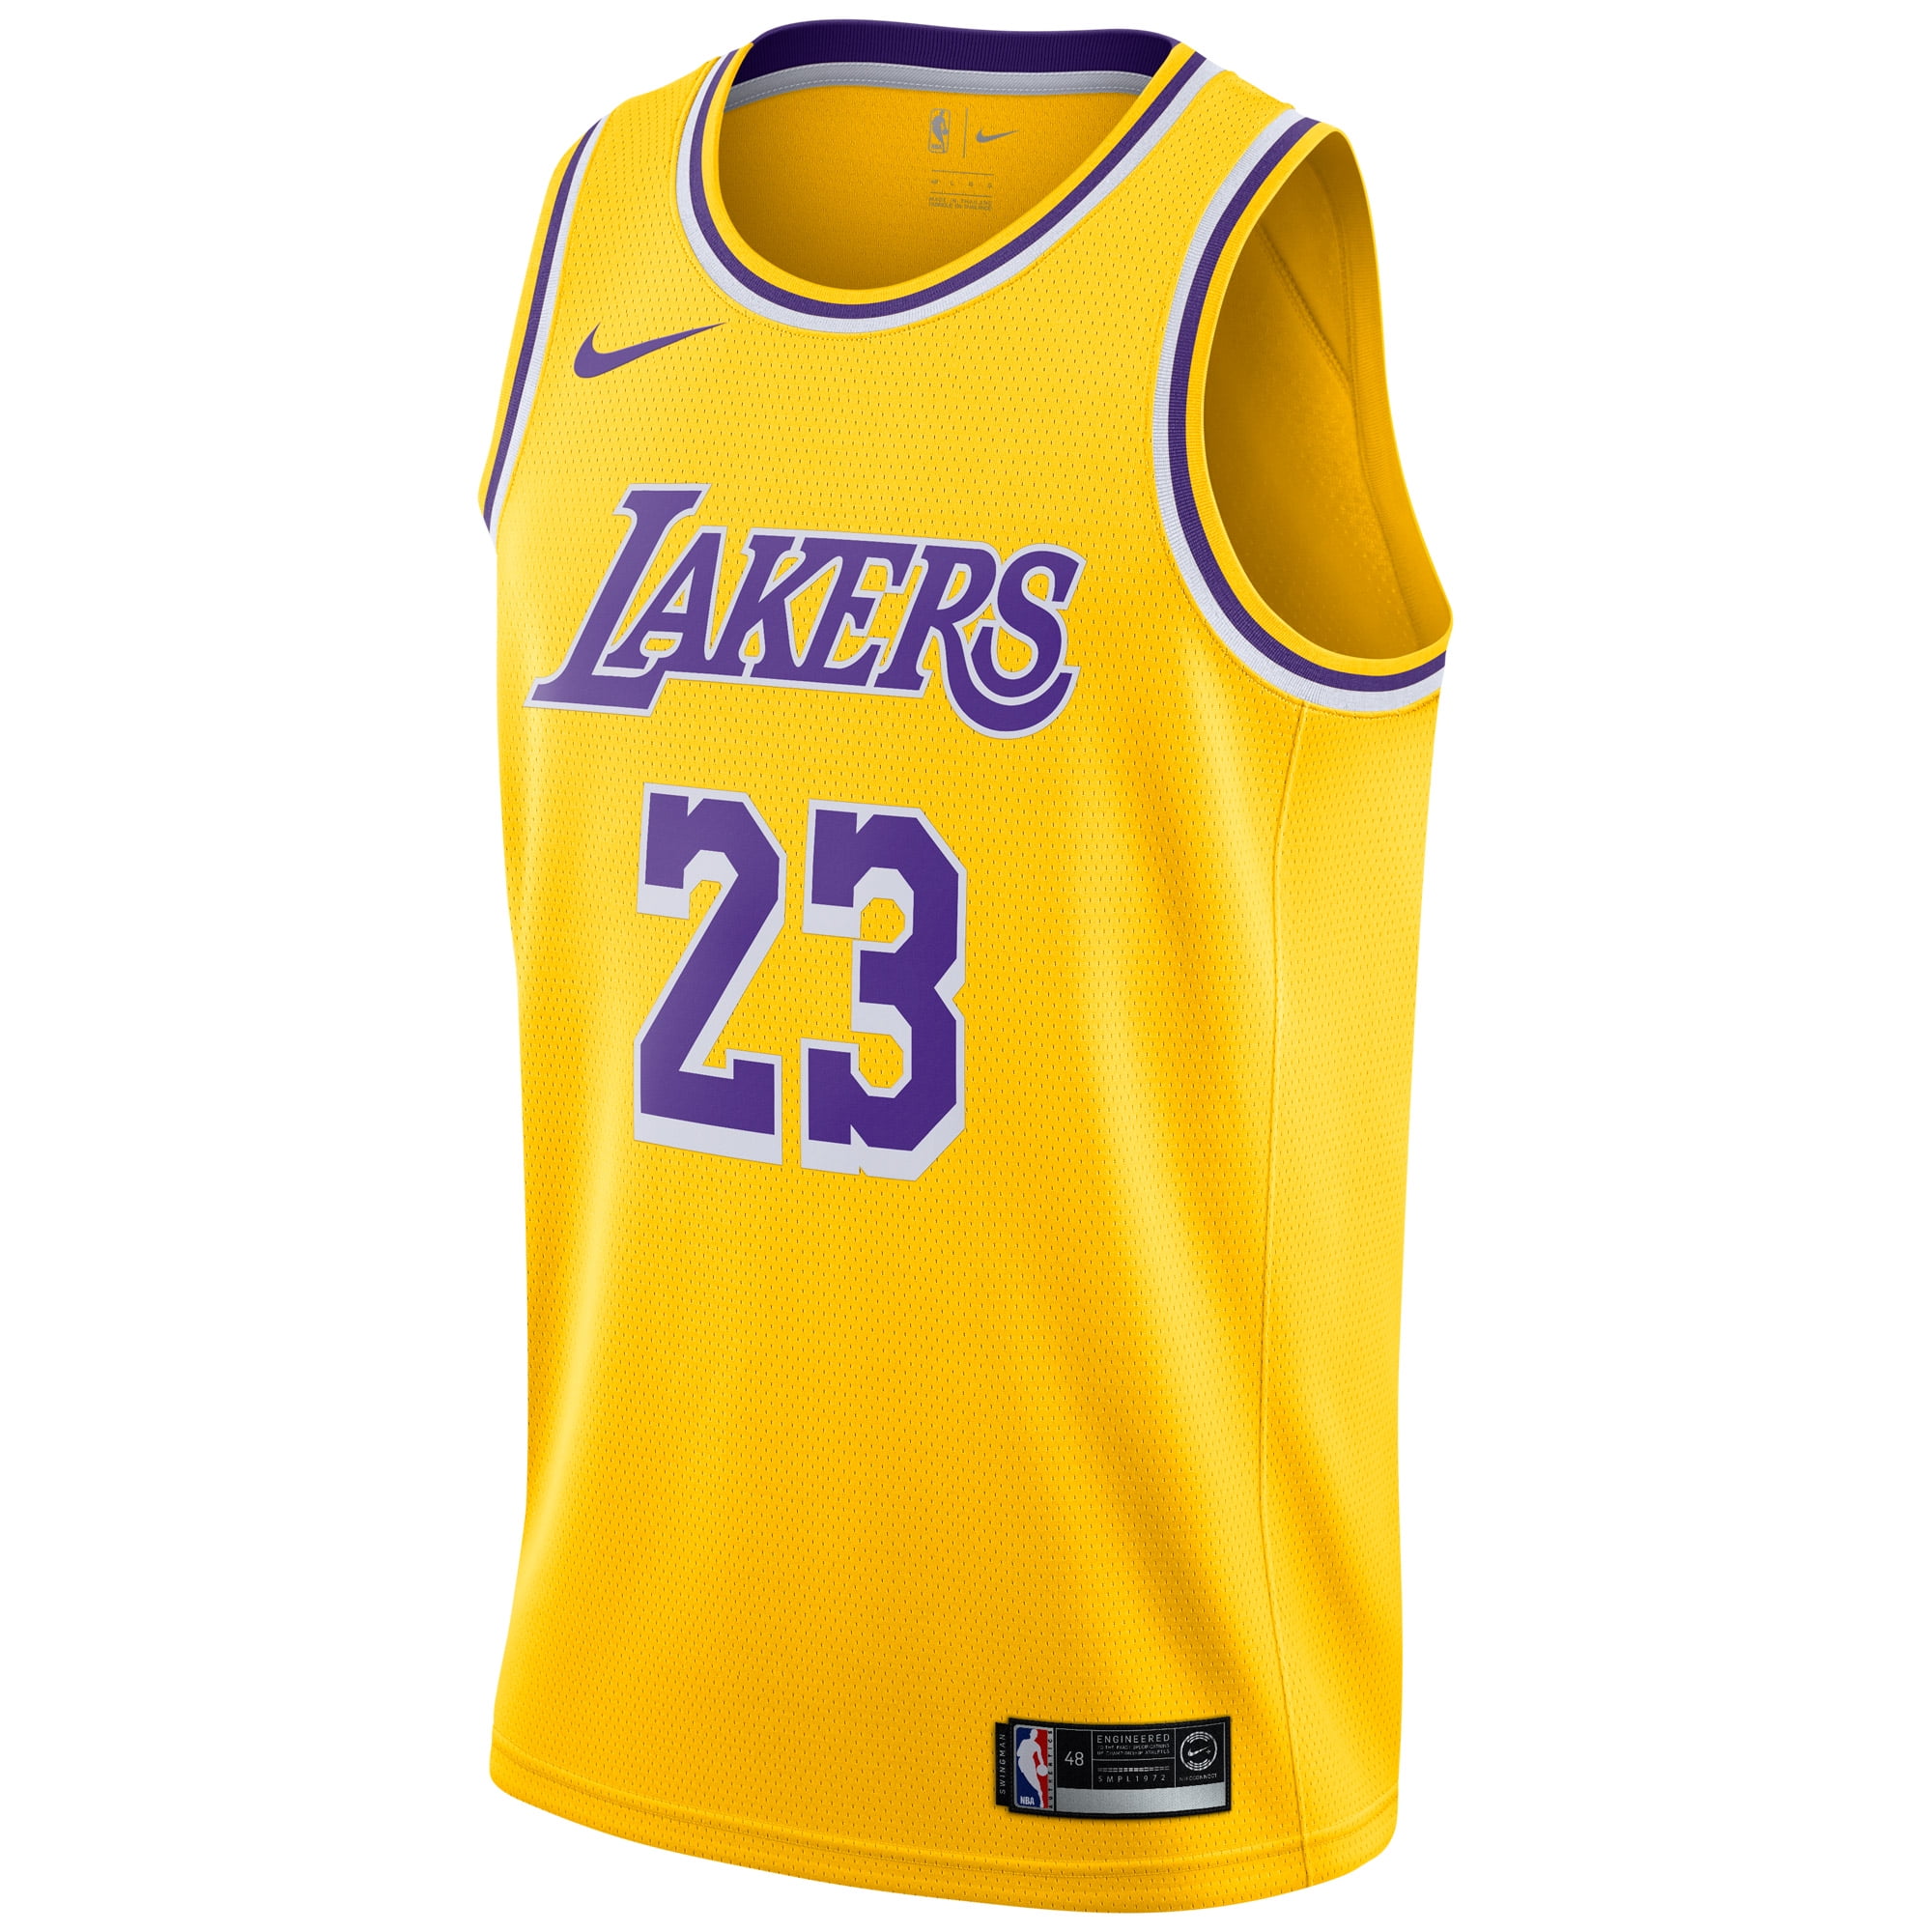 Los Angeles Lakers Team Shop - Walmart.com